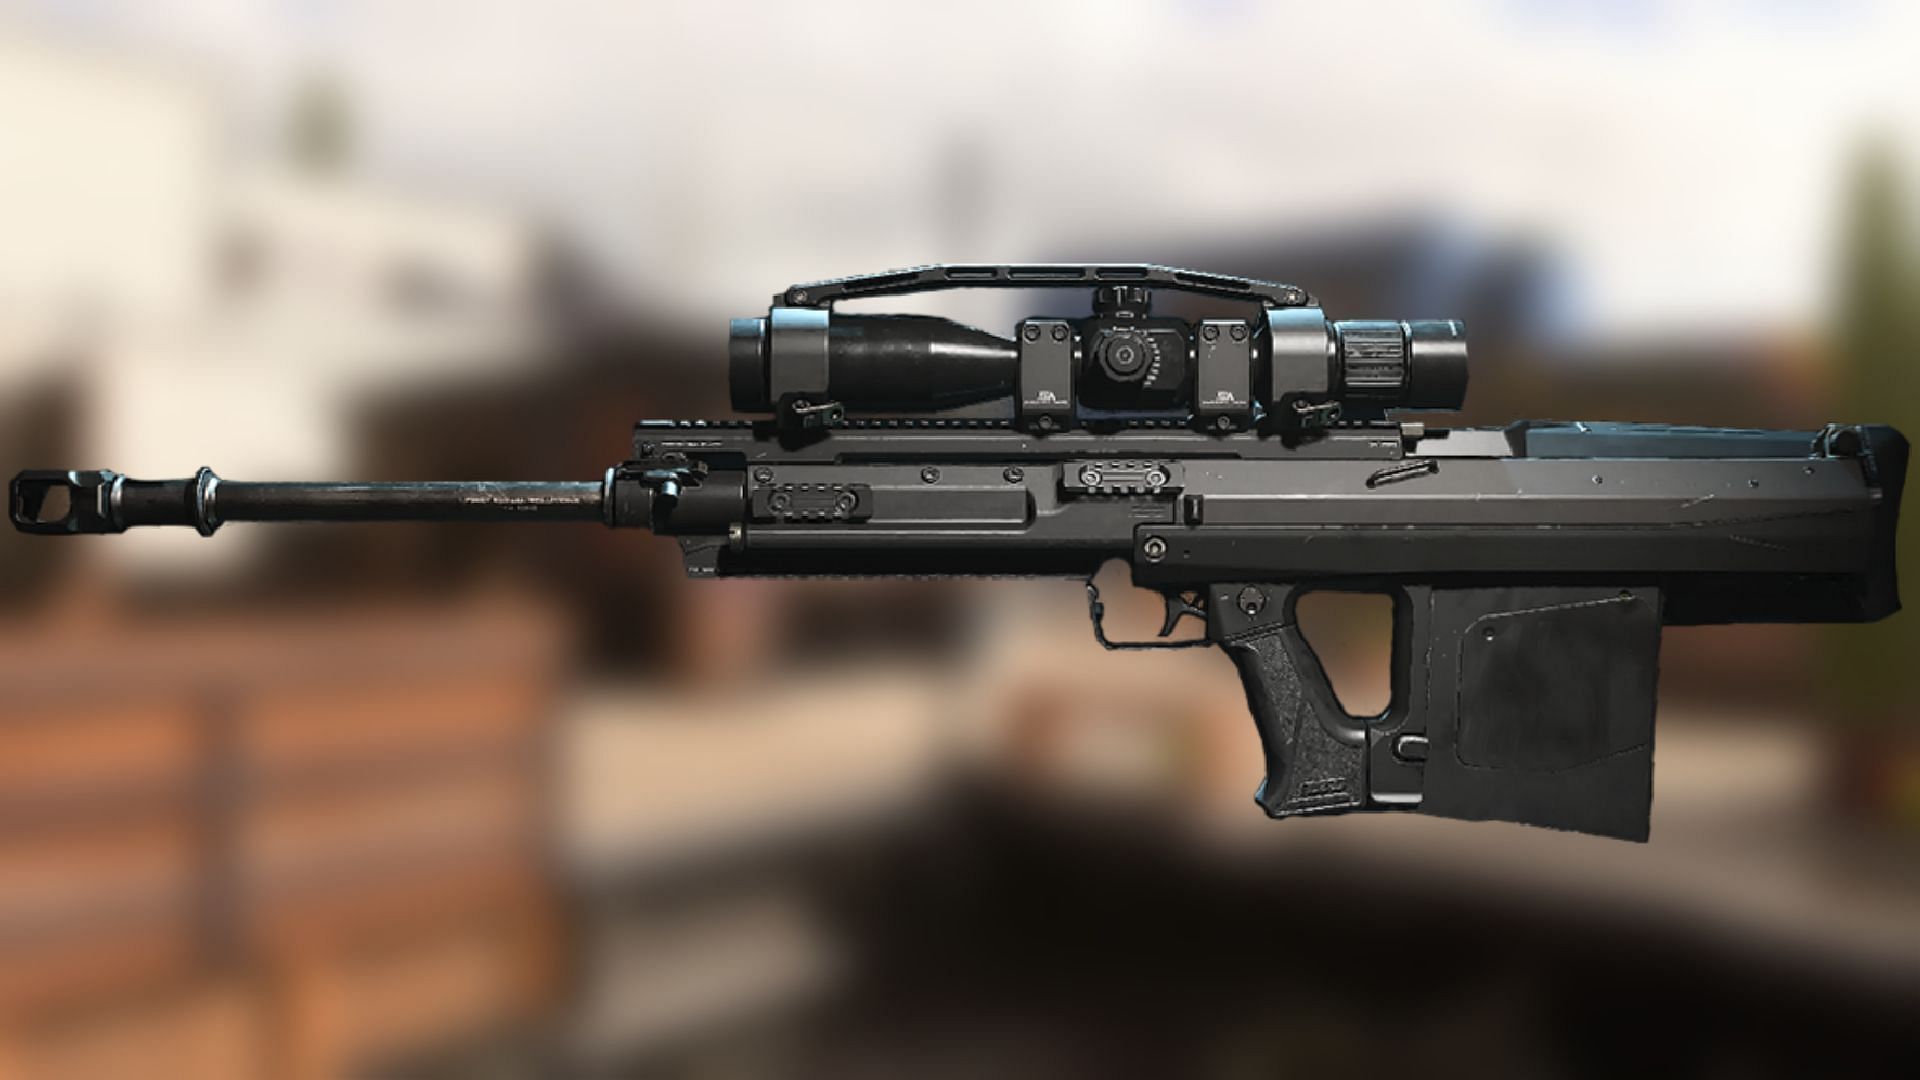 Modern Warfare 2 Signal 50 sniper best class setup and how to